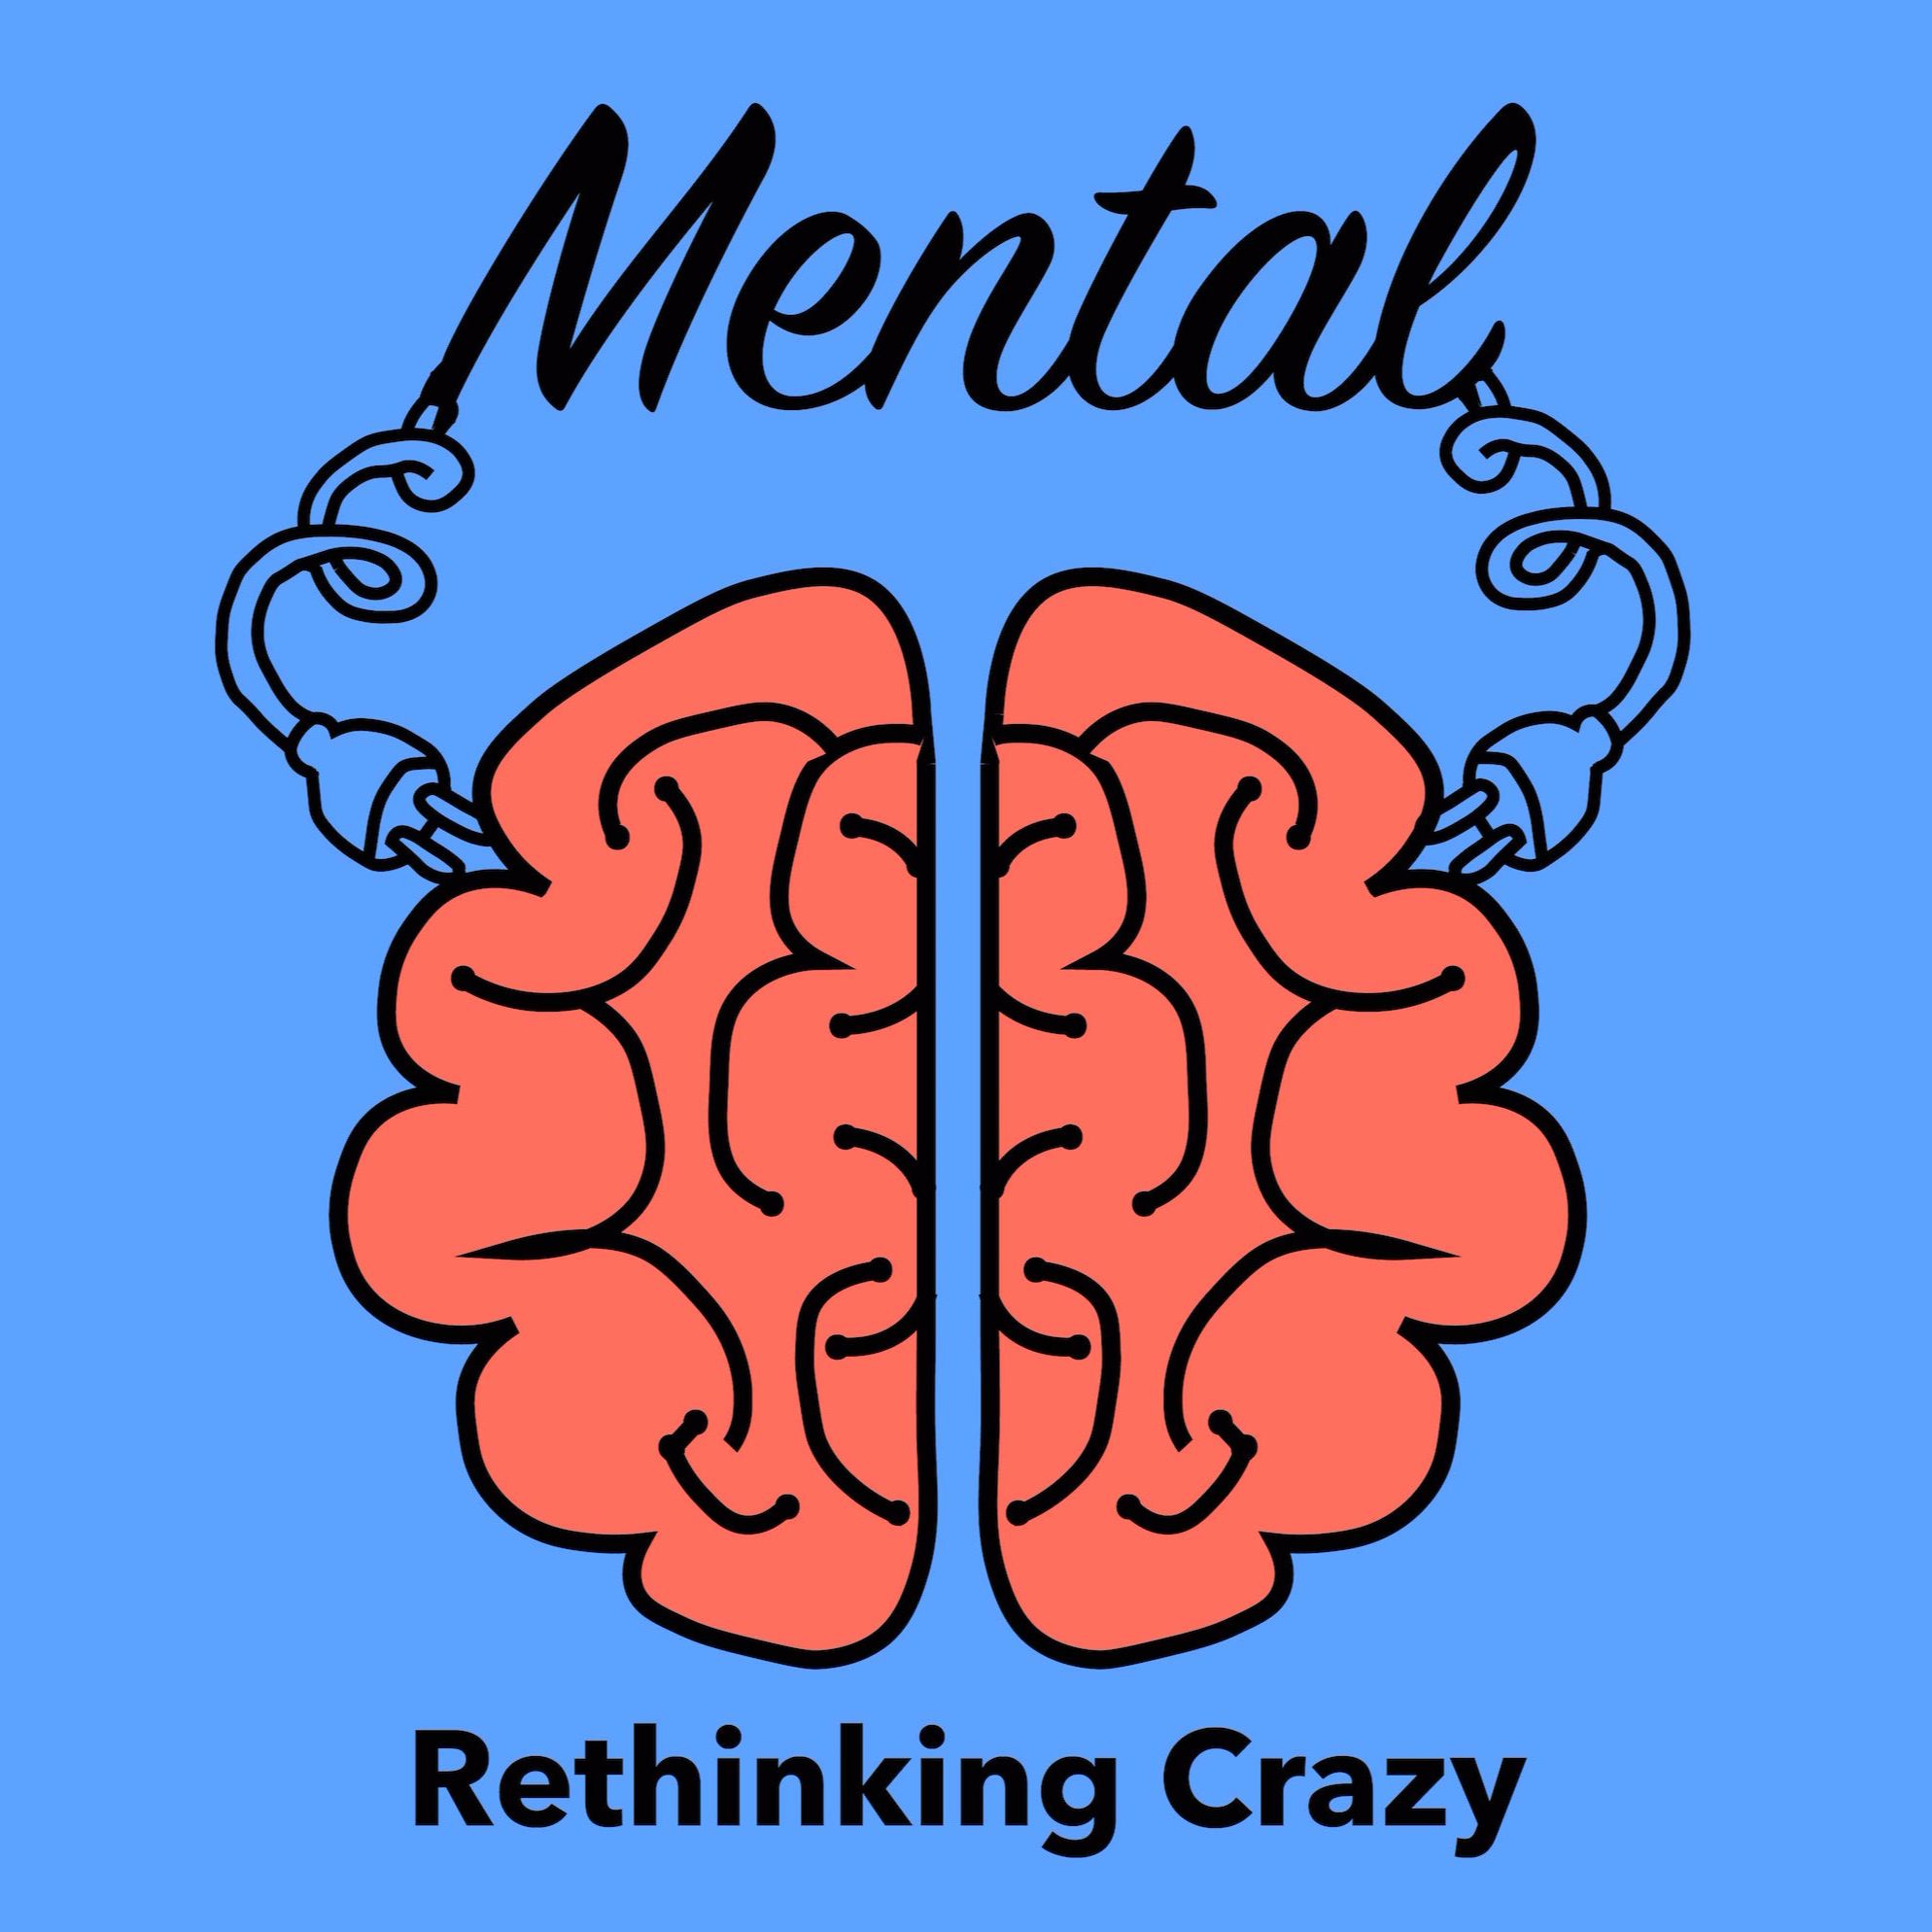 Mental. Rethinking Crazy.